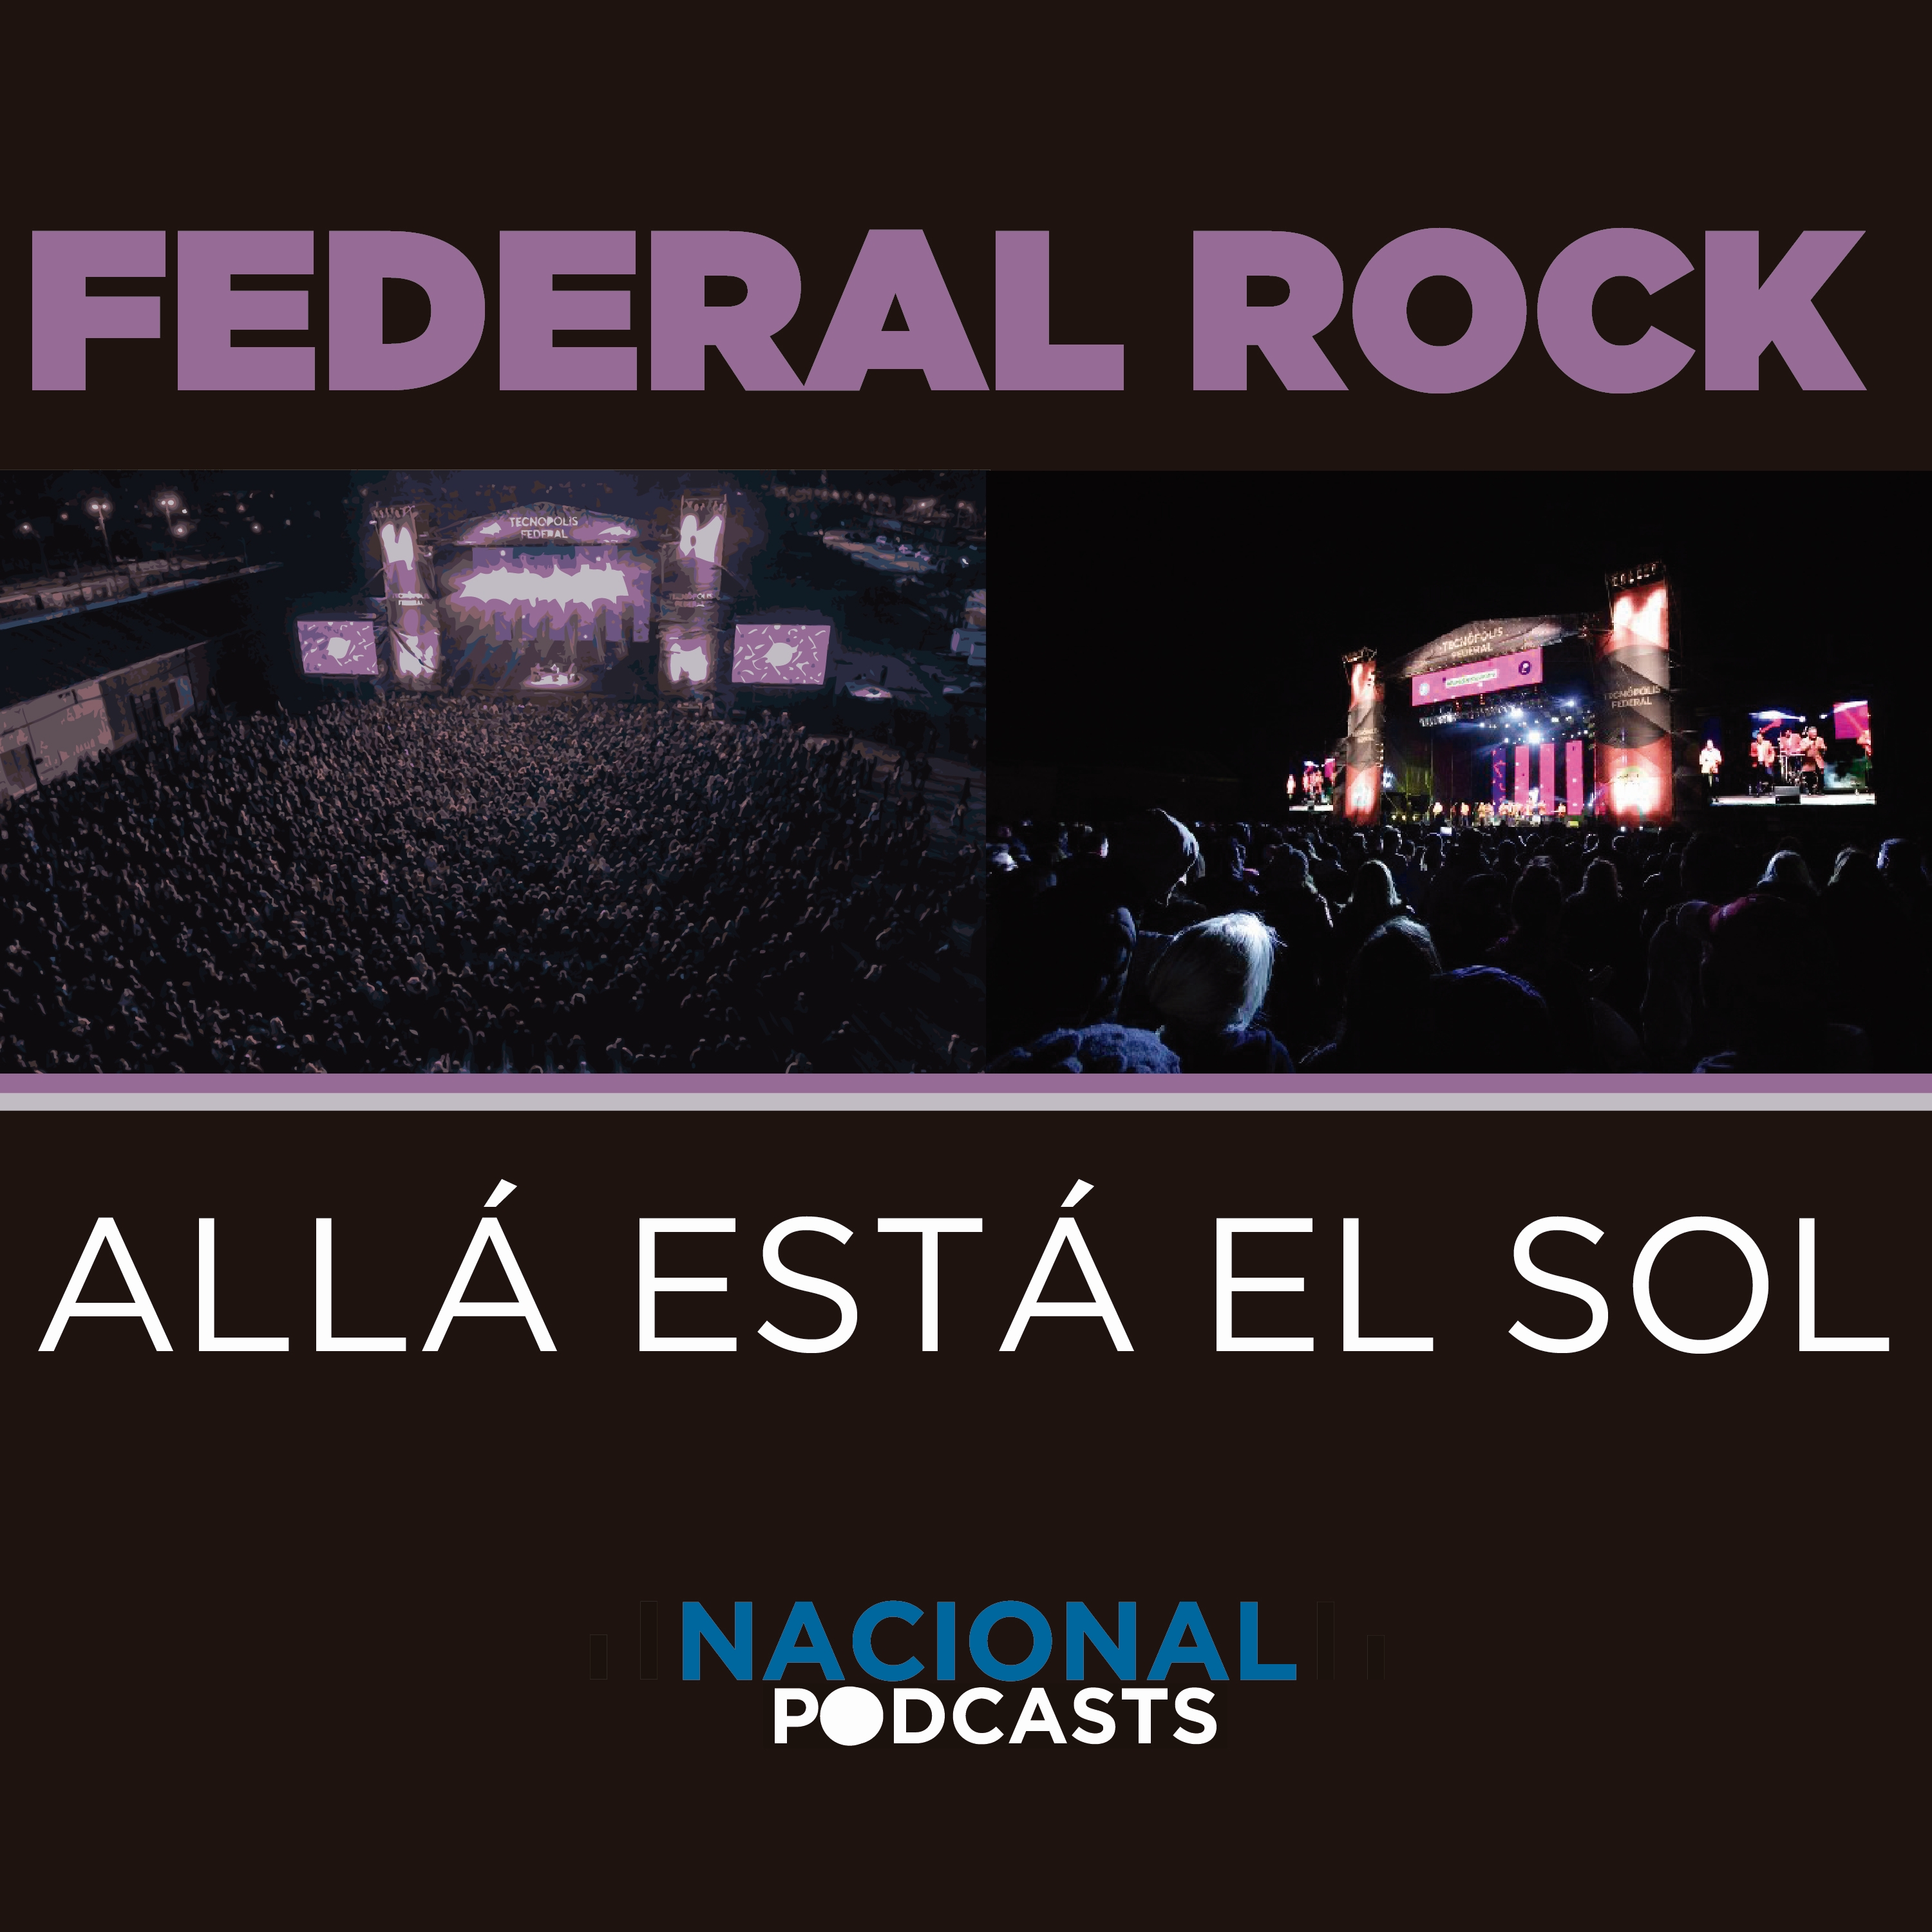 Federal Rock